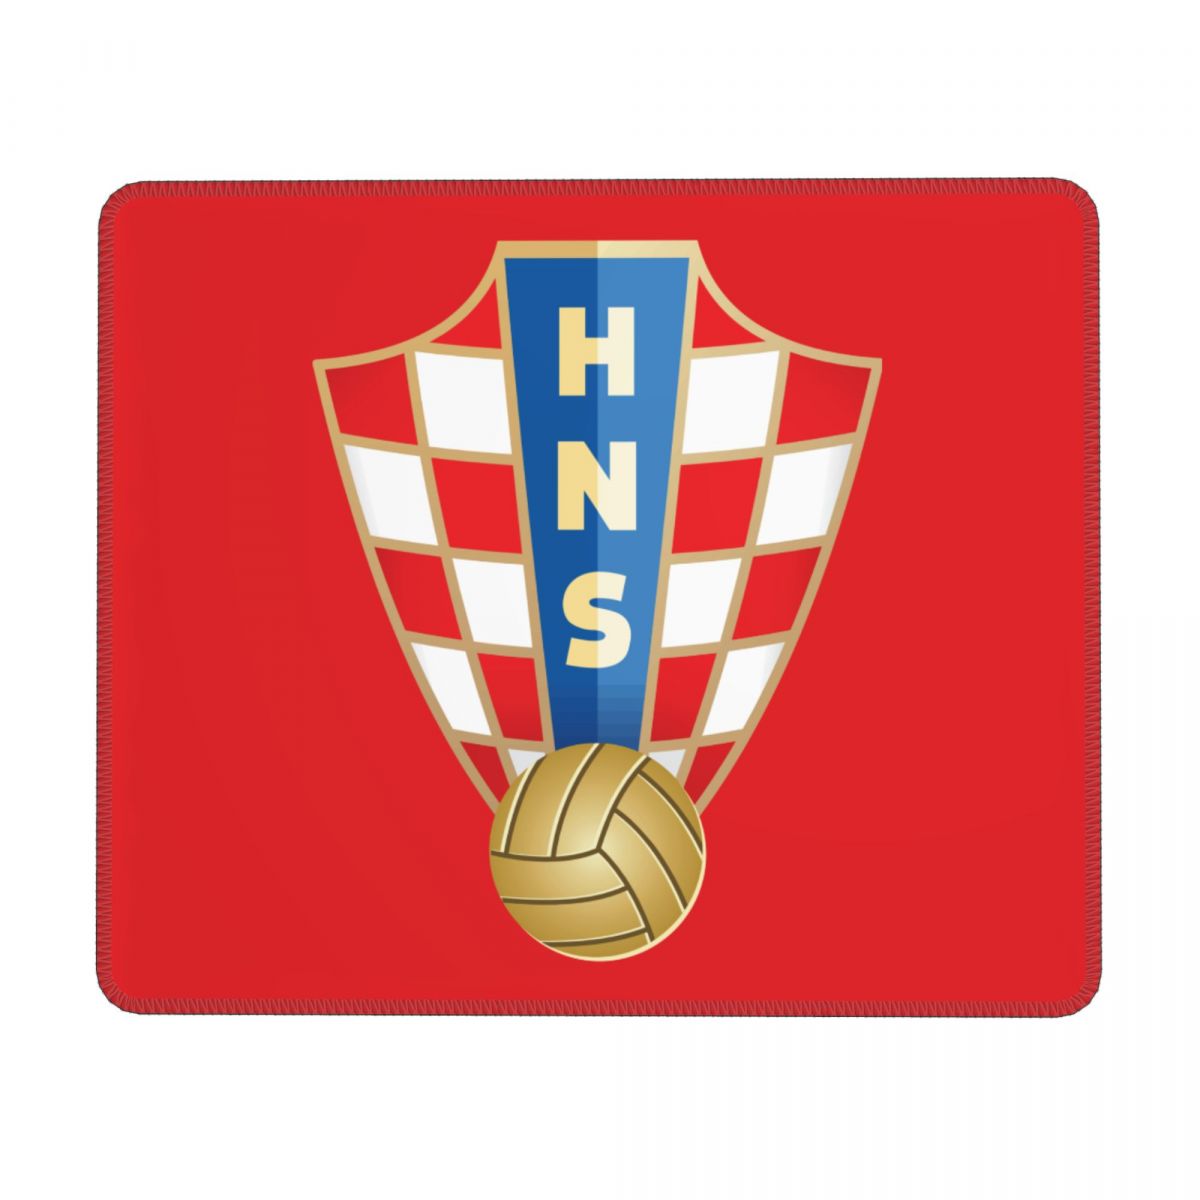 Croatia National Football Team Square Rubber Base MousePads